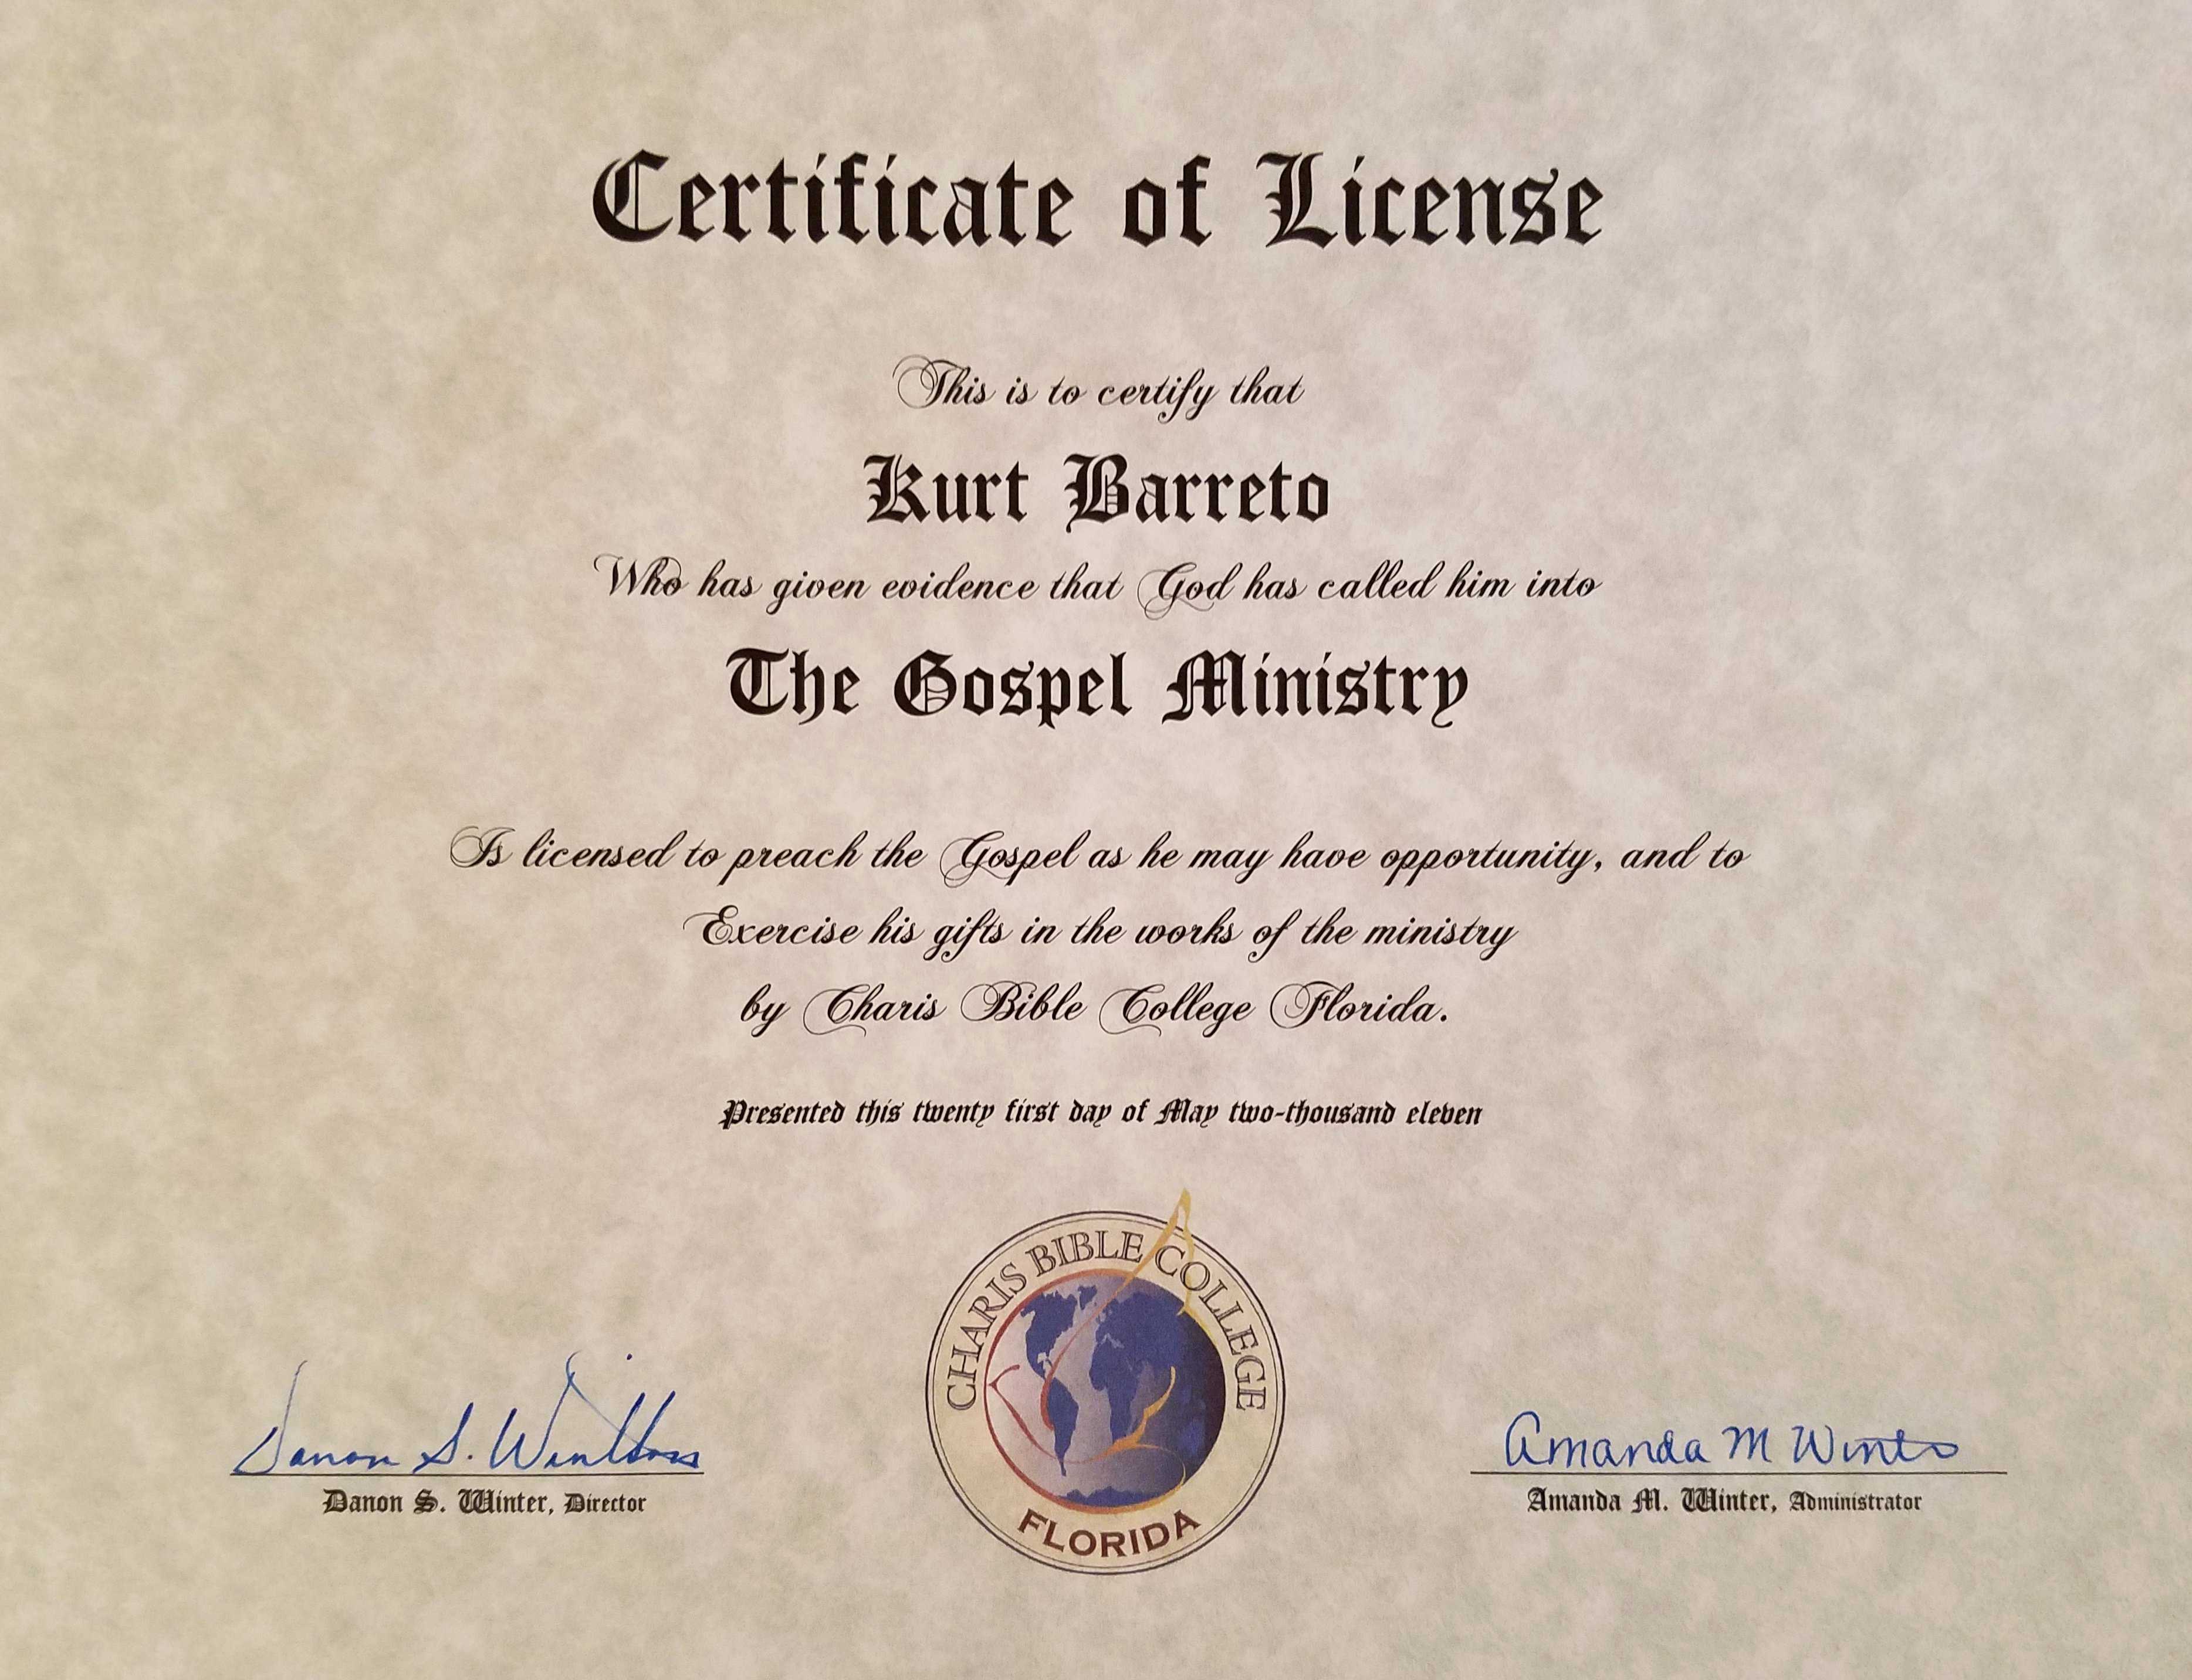 30 Certificate Of License For The Gospel Ministry Template Intended For Certificate Of License Template